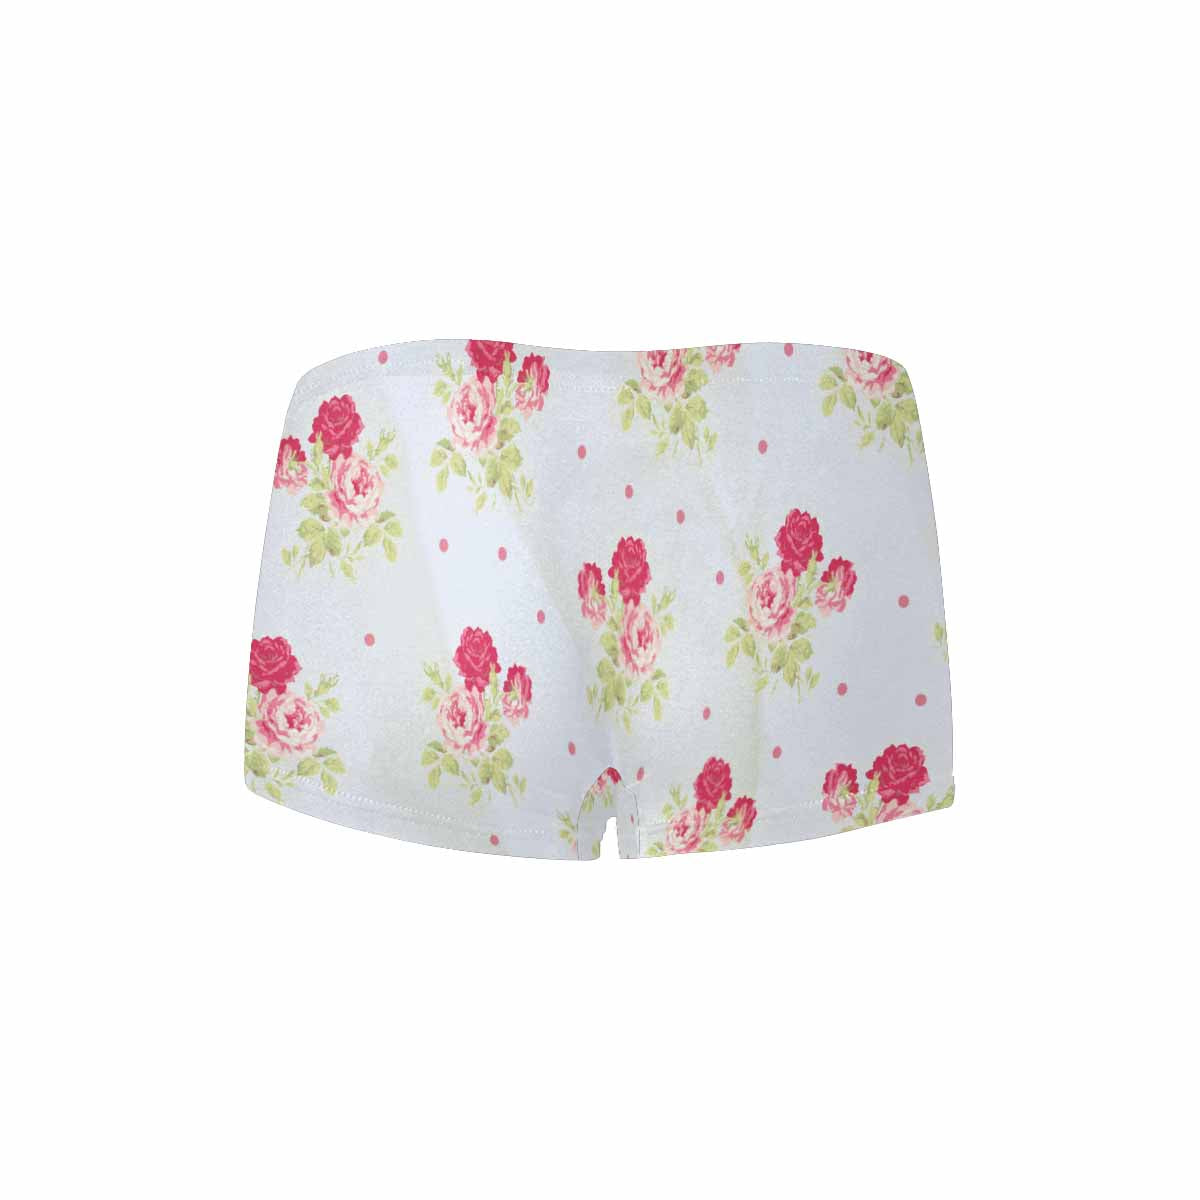 Floral 2, boyshorts, daisy dukes, pum pum shorts, panties, design 16